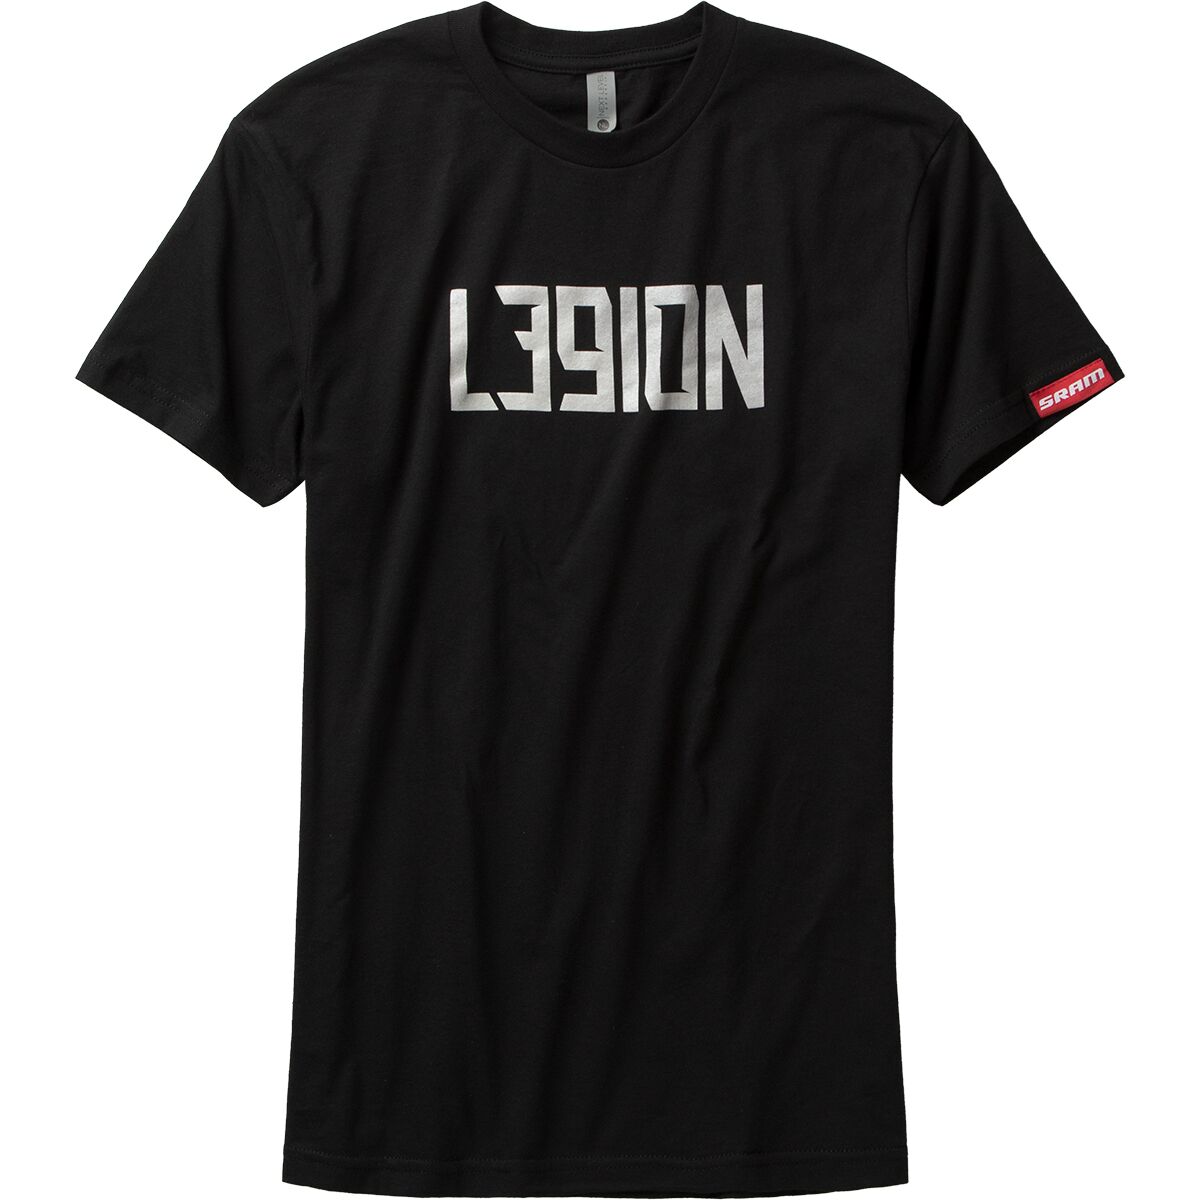 SRAM L39ION T-Shirt - Women's